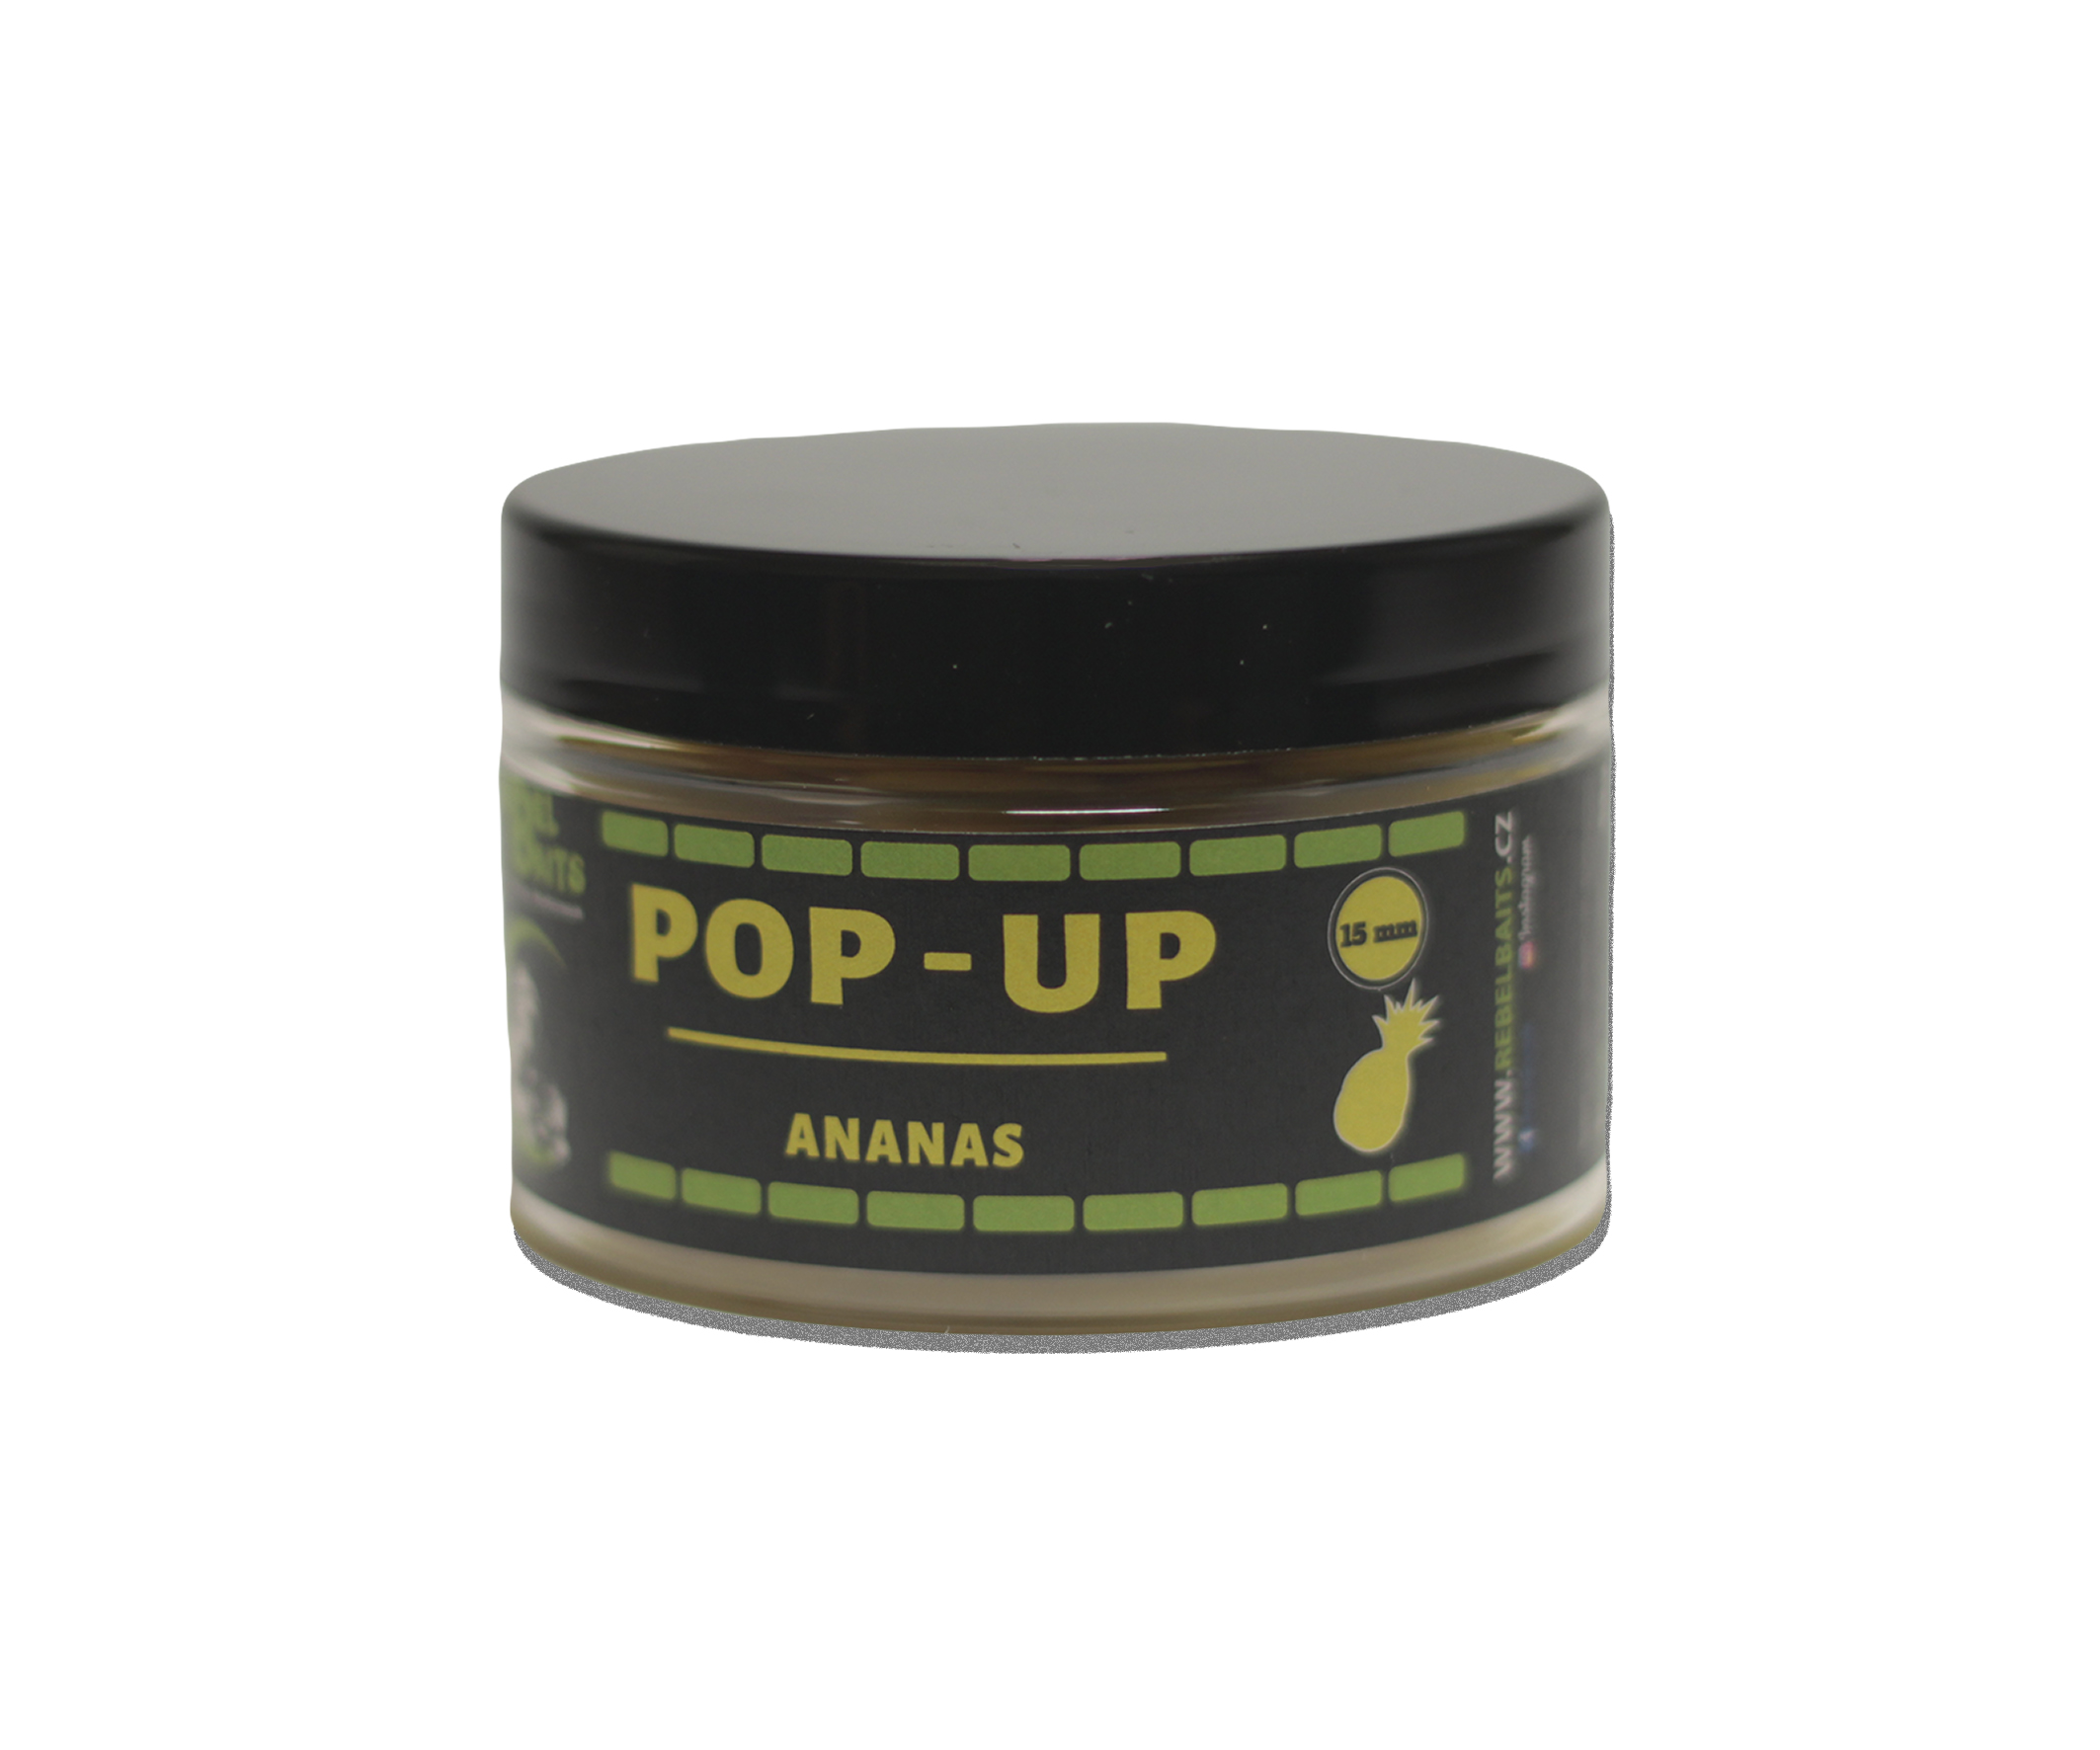 Pop-up ANANAS